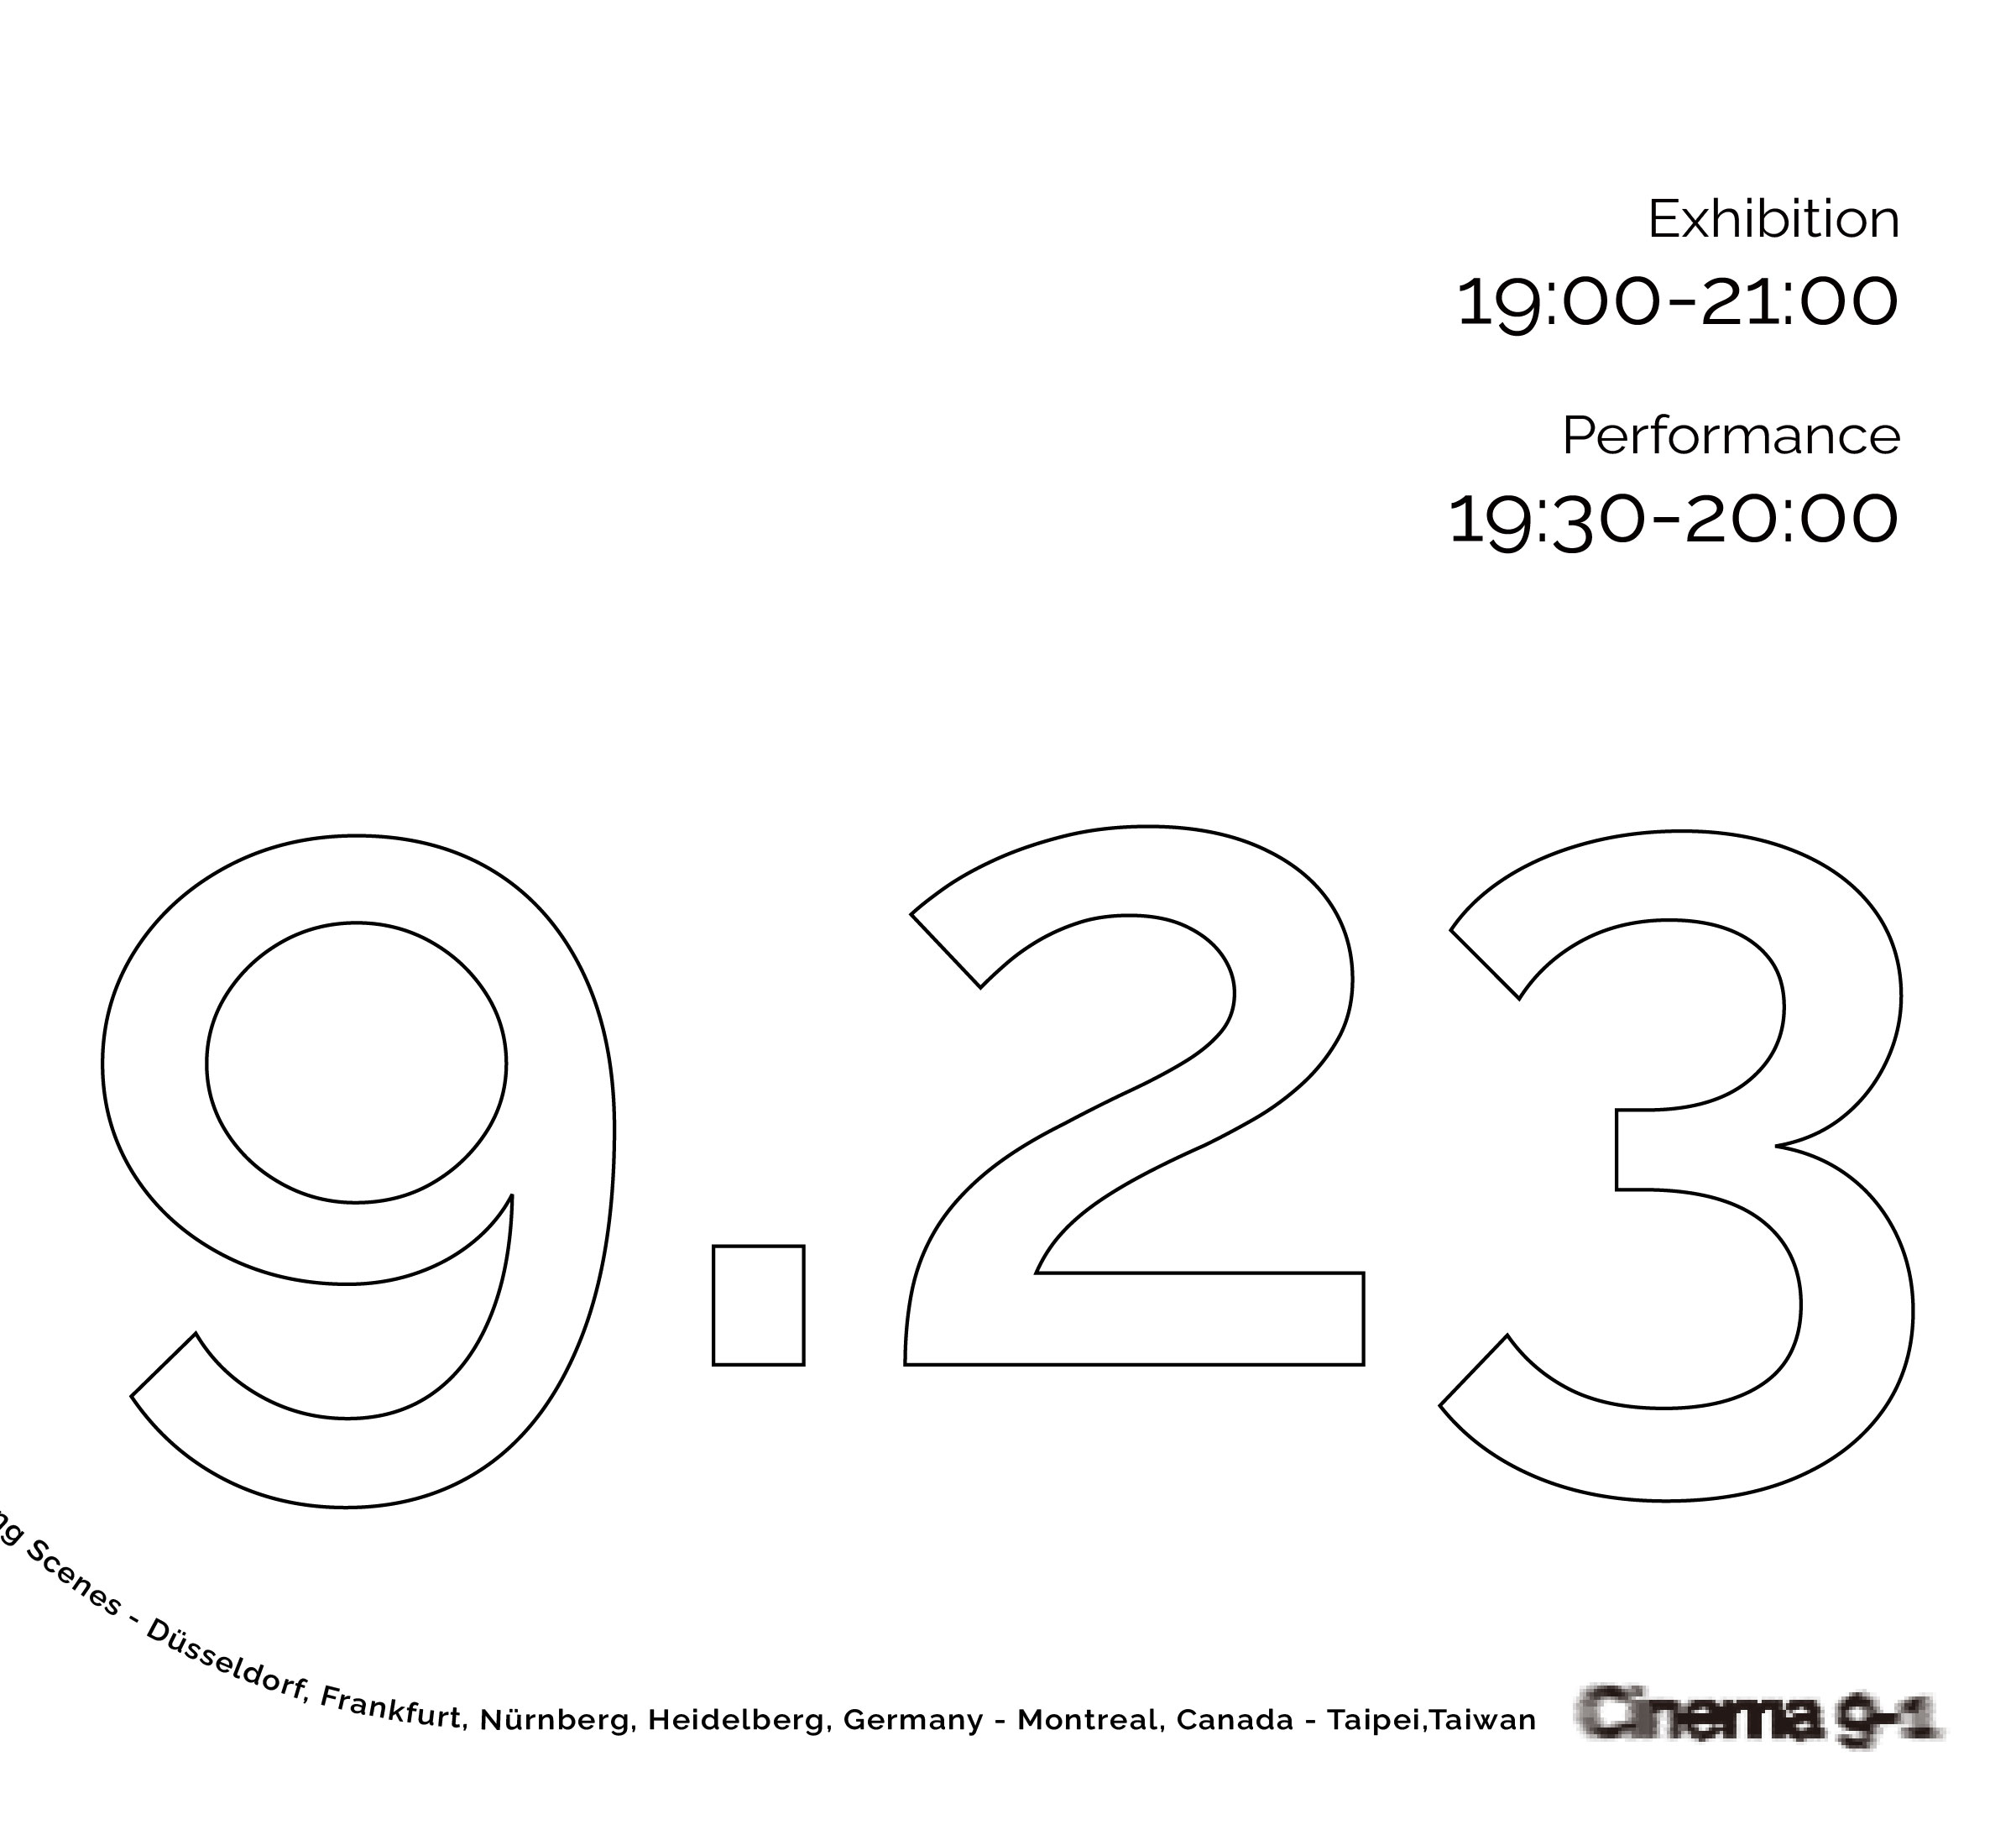 Exhibition 'Cinema 9-1' poster, DAY 2.